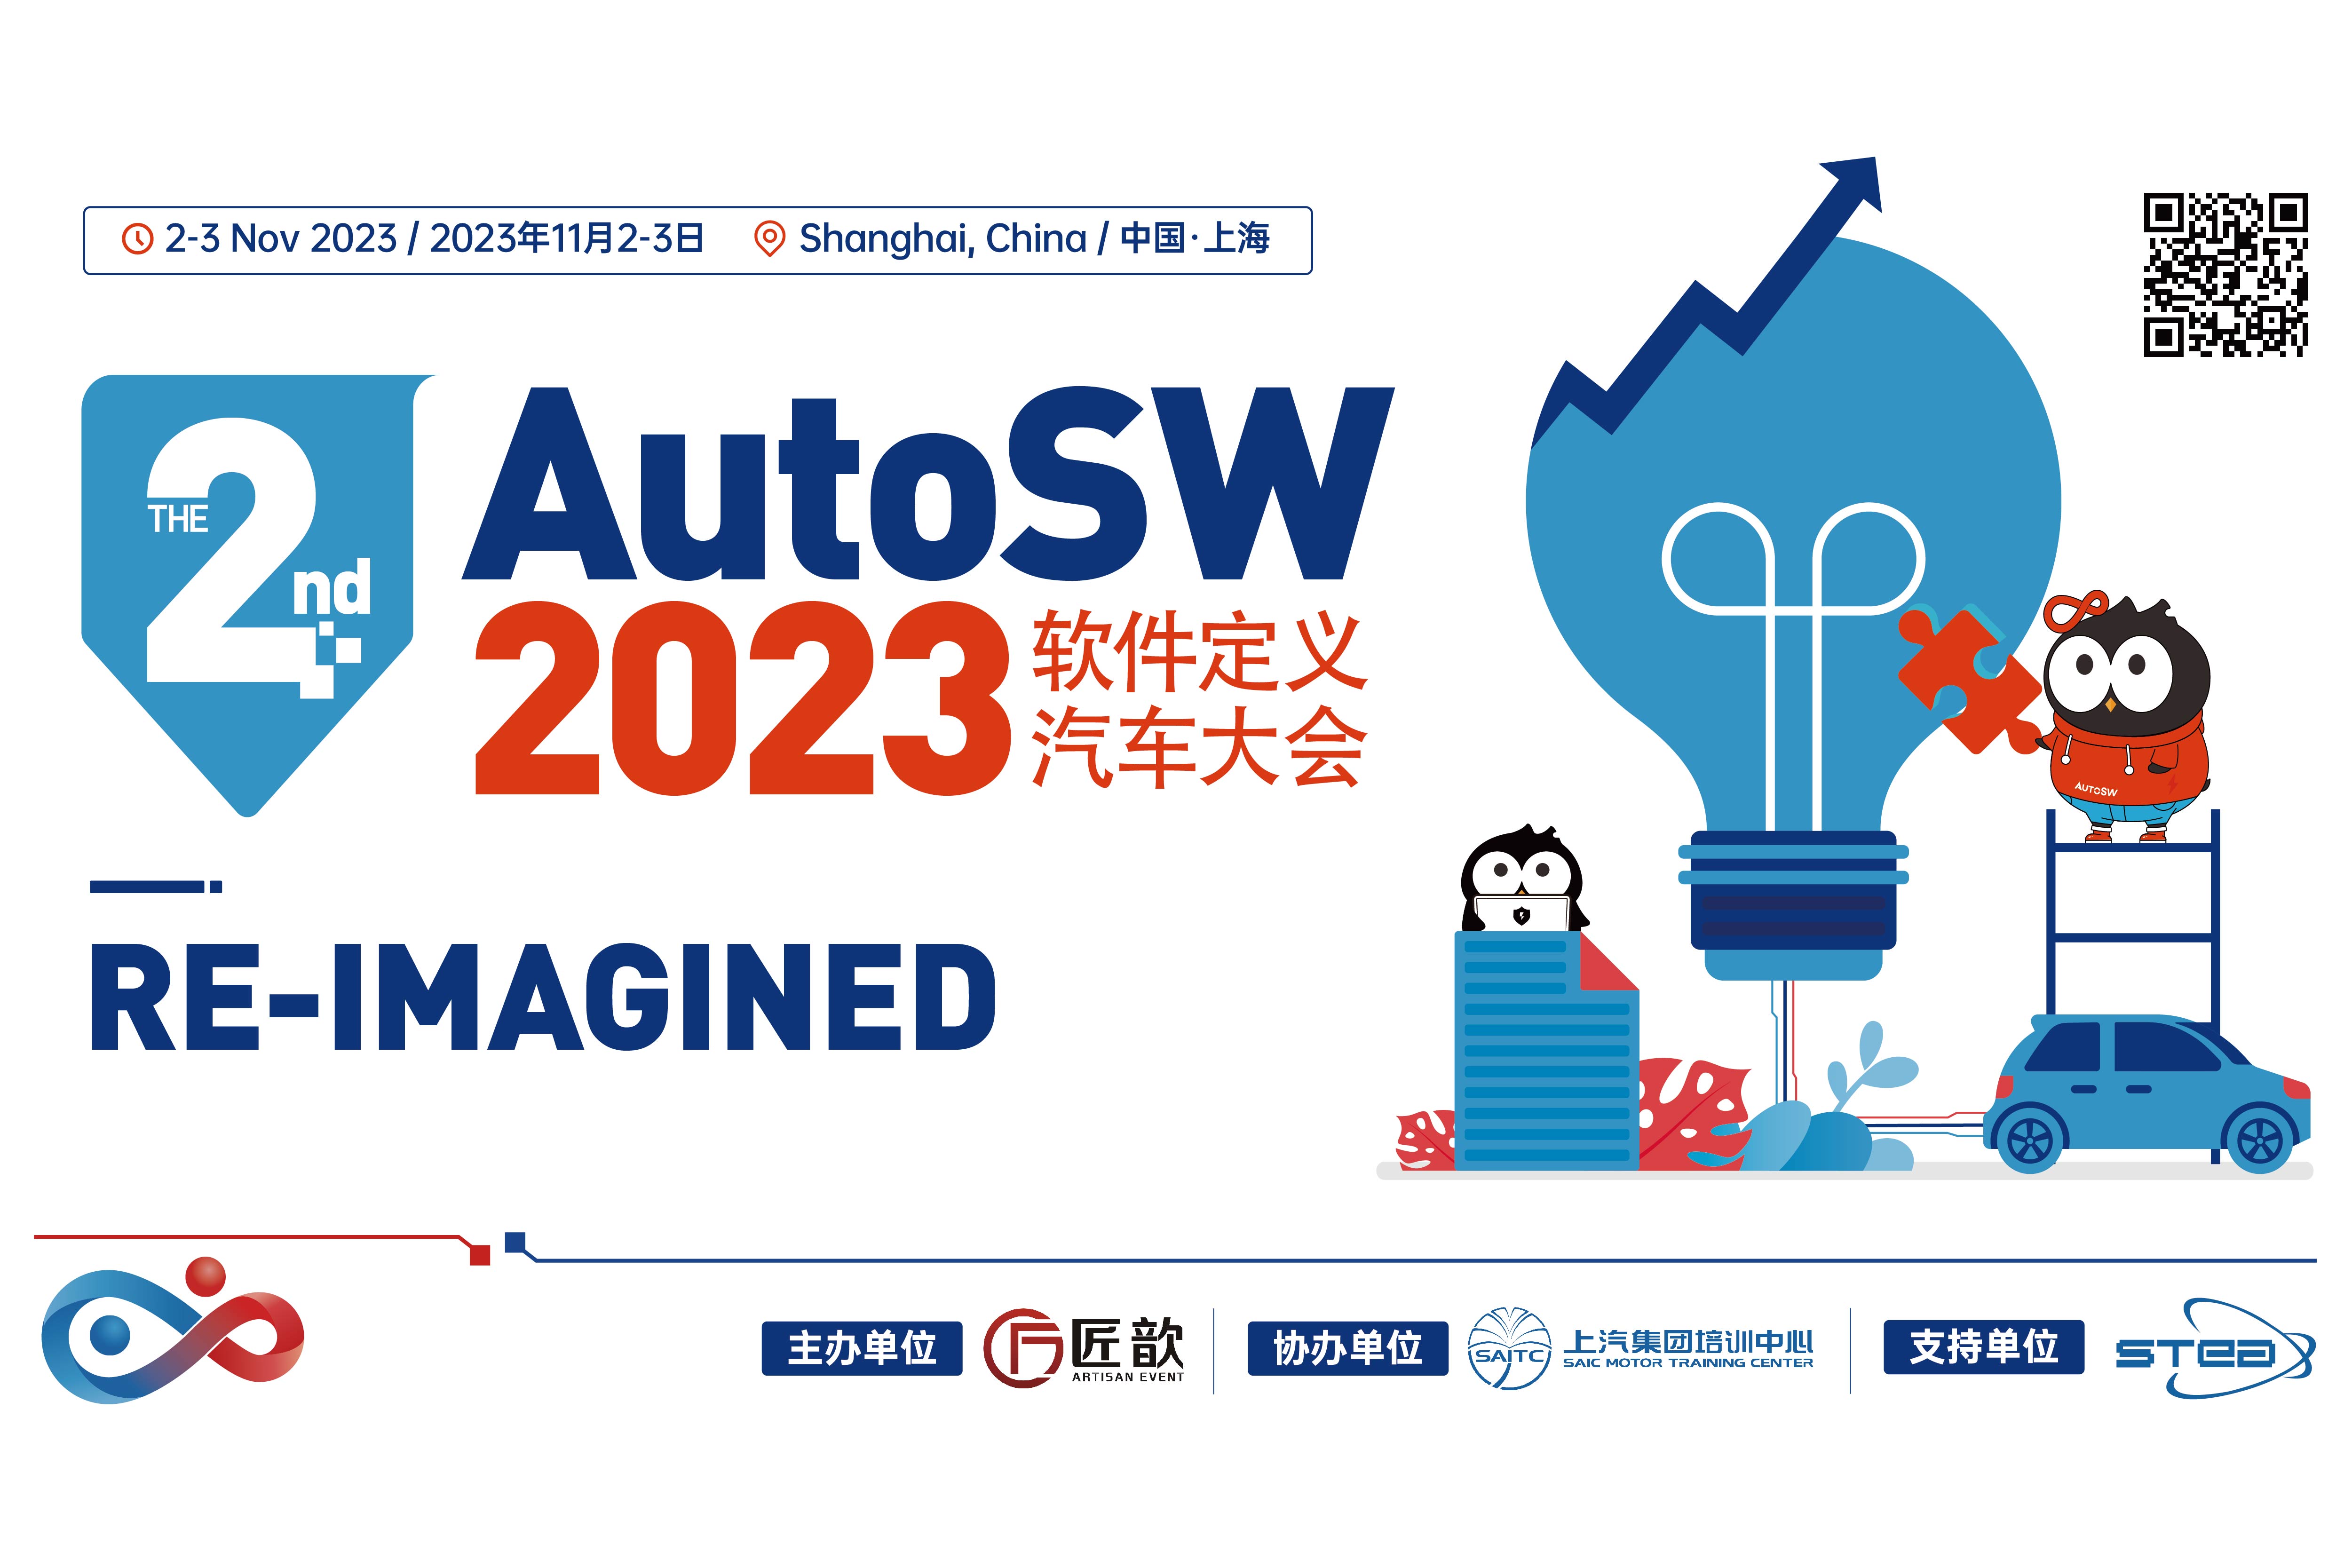 The 2nd AutoSW 2023软件定义汽车大会